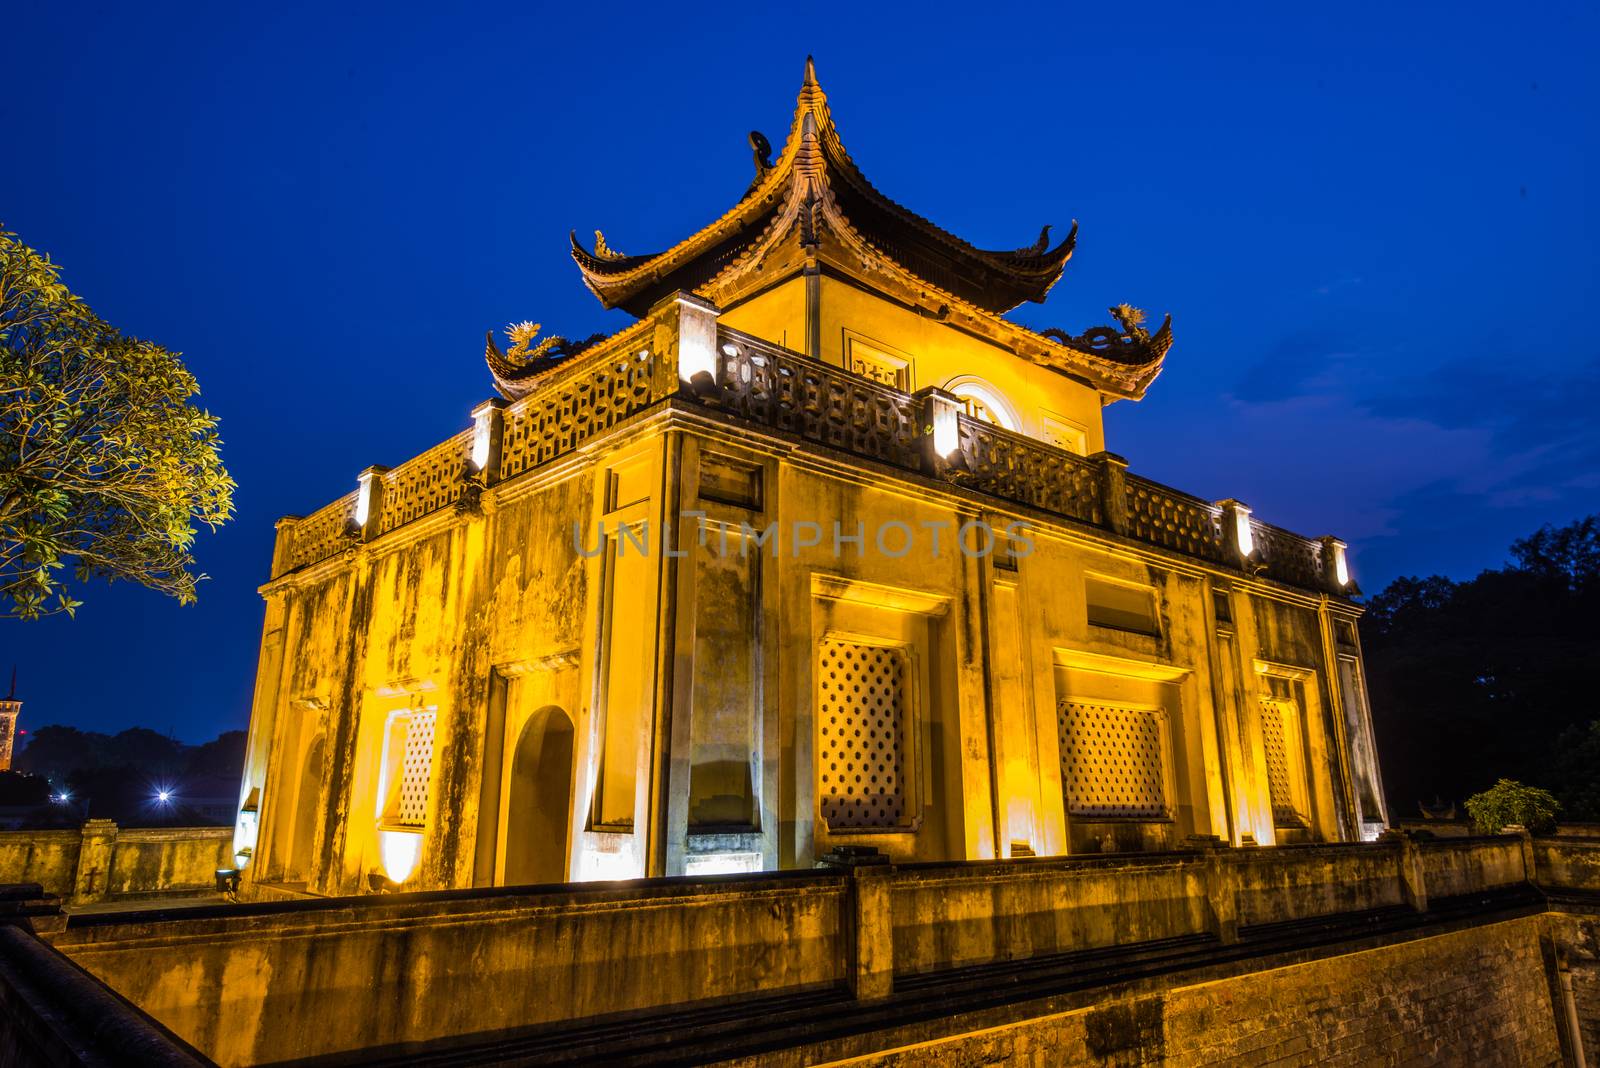 Imperial Citadel of Hanoi by trocphunc